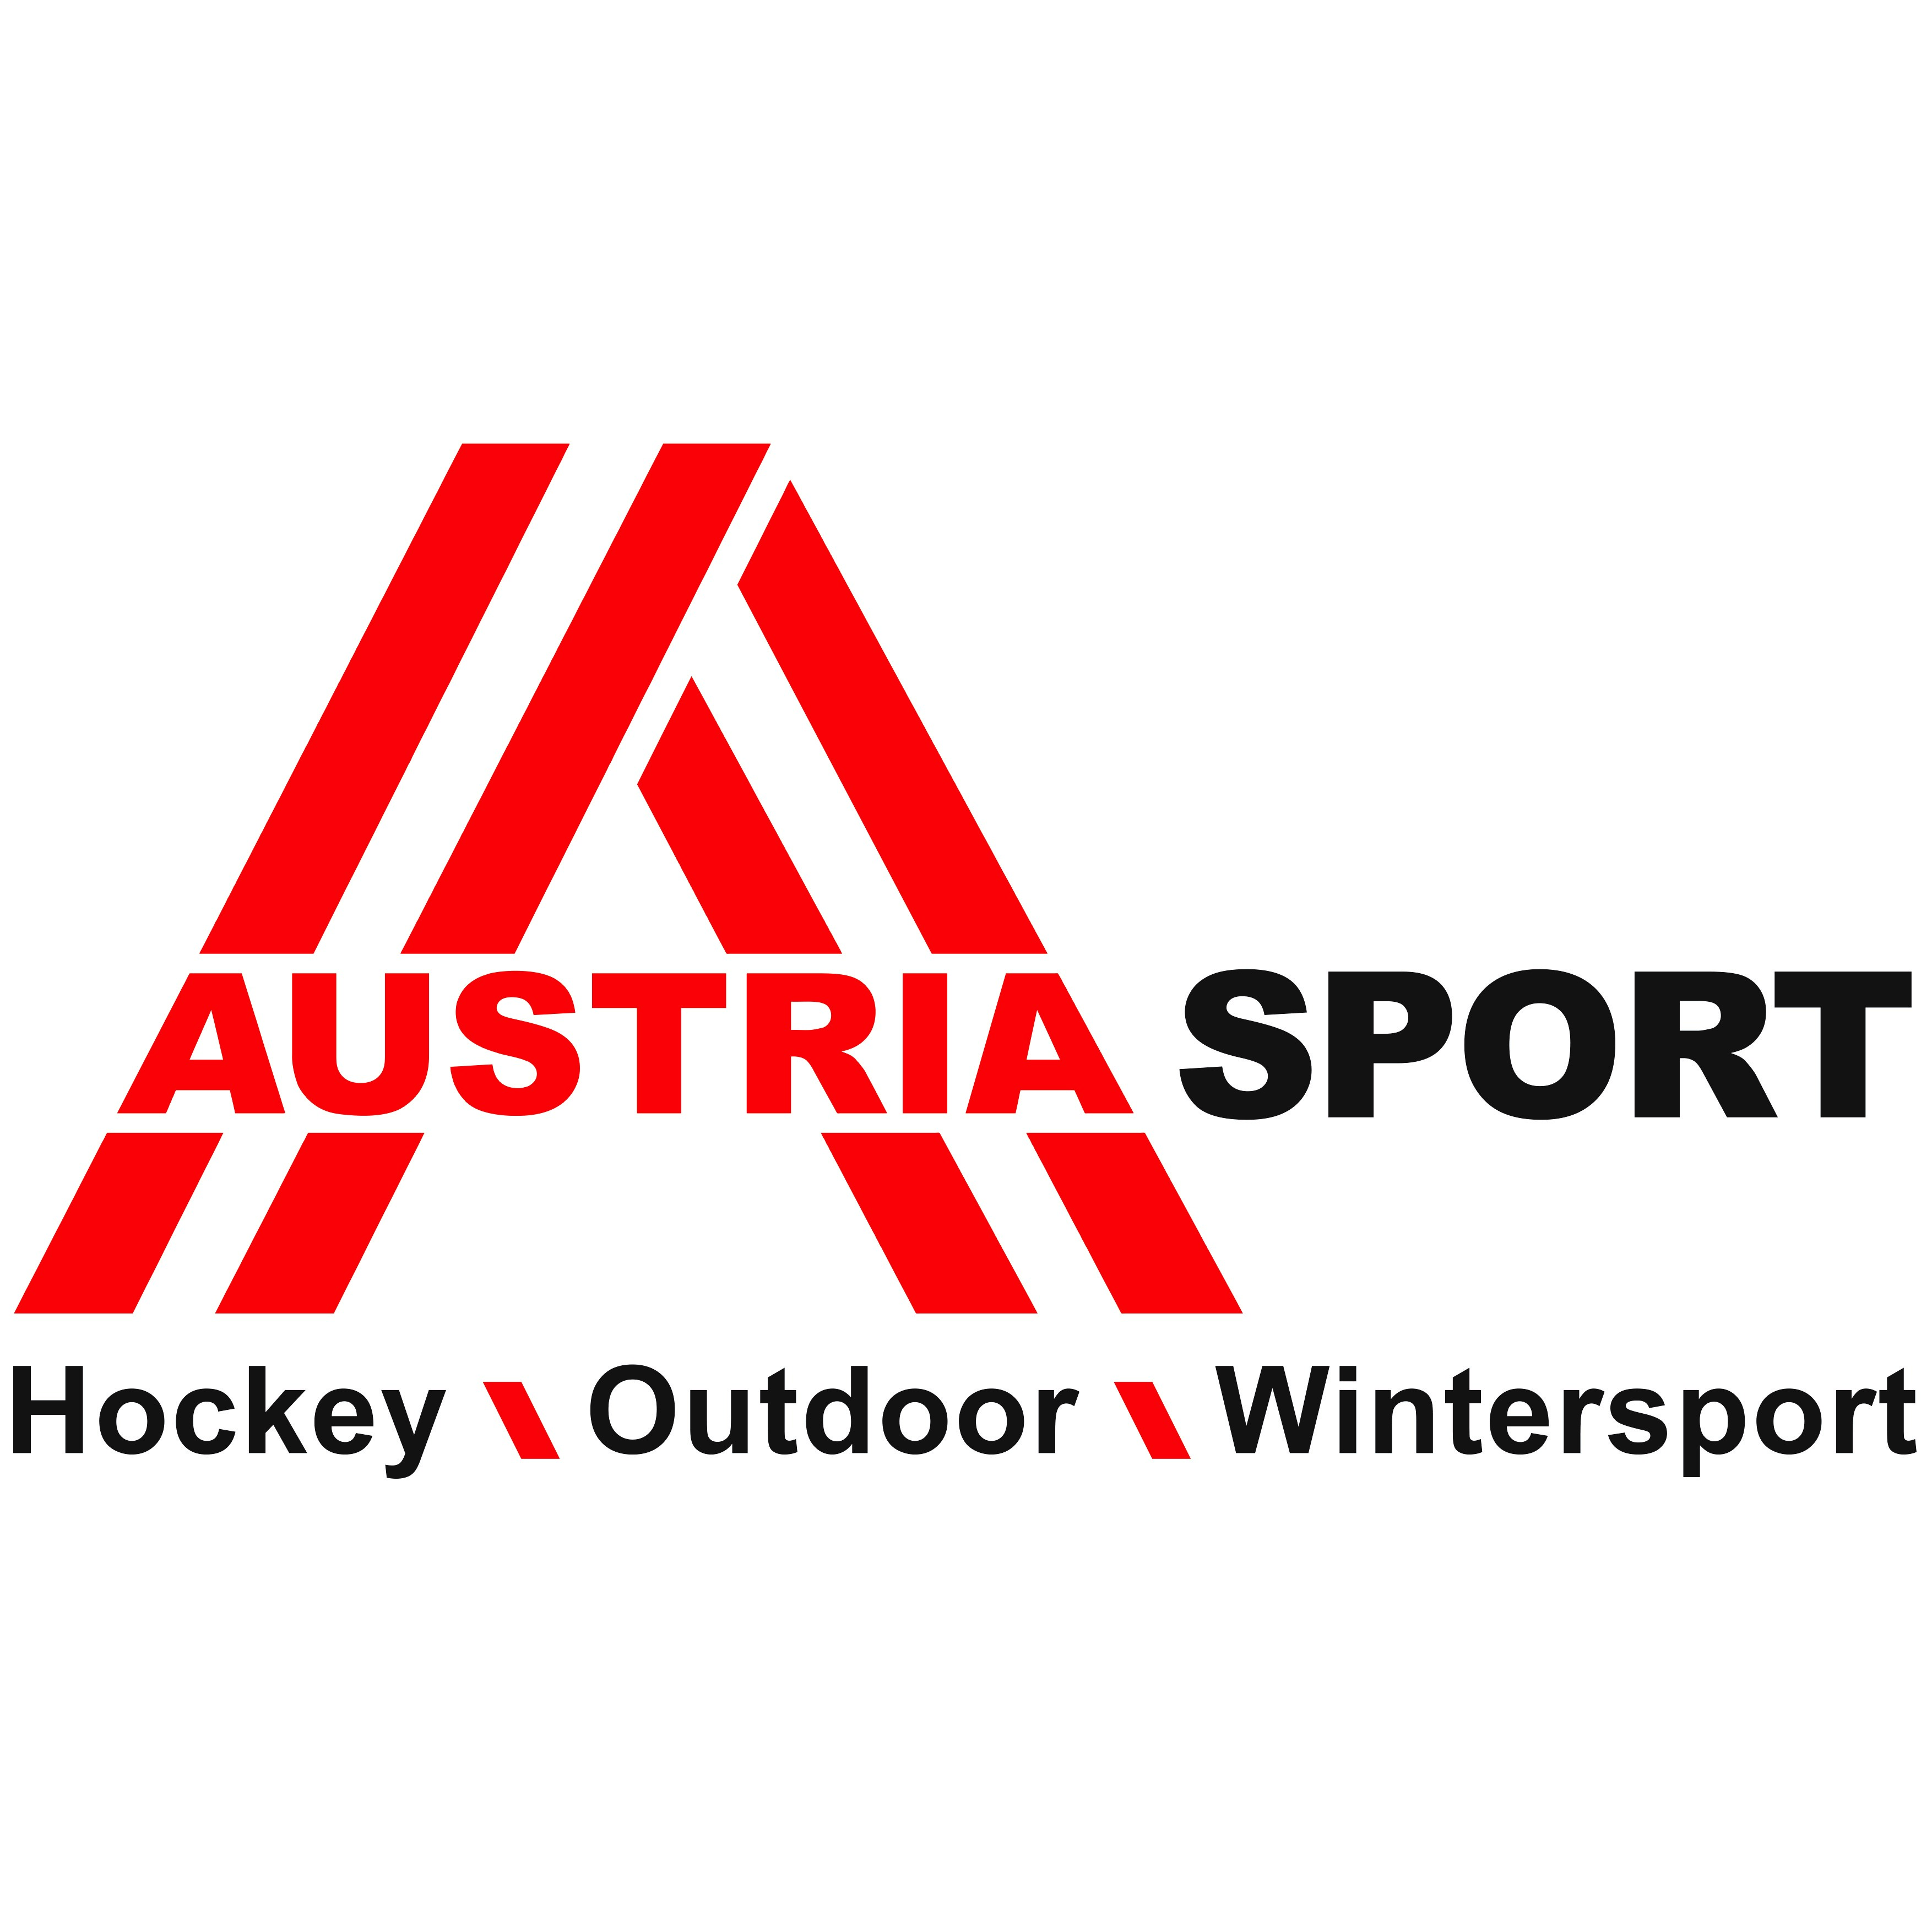 Austria Sport goed